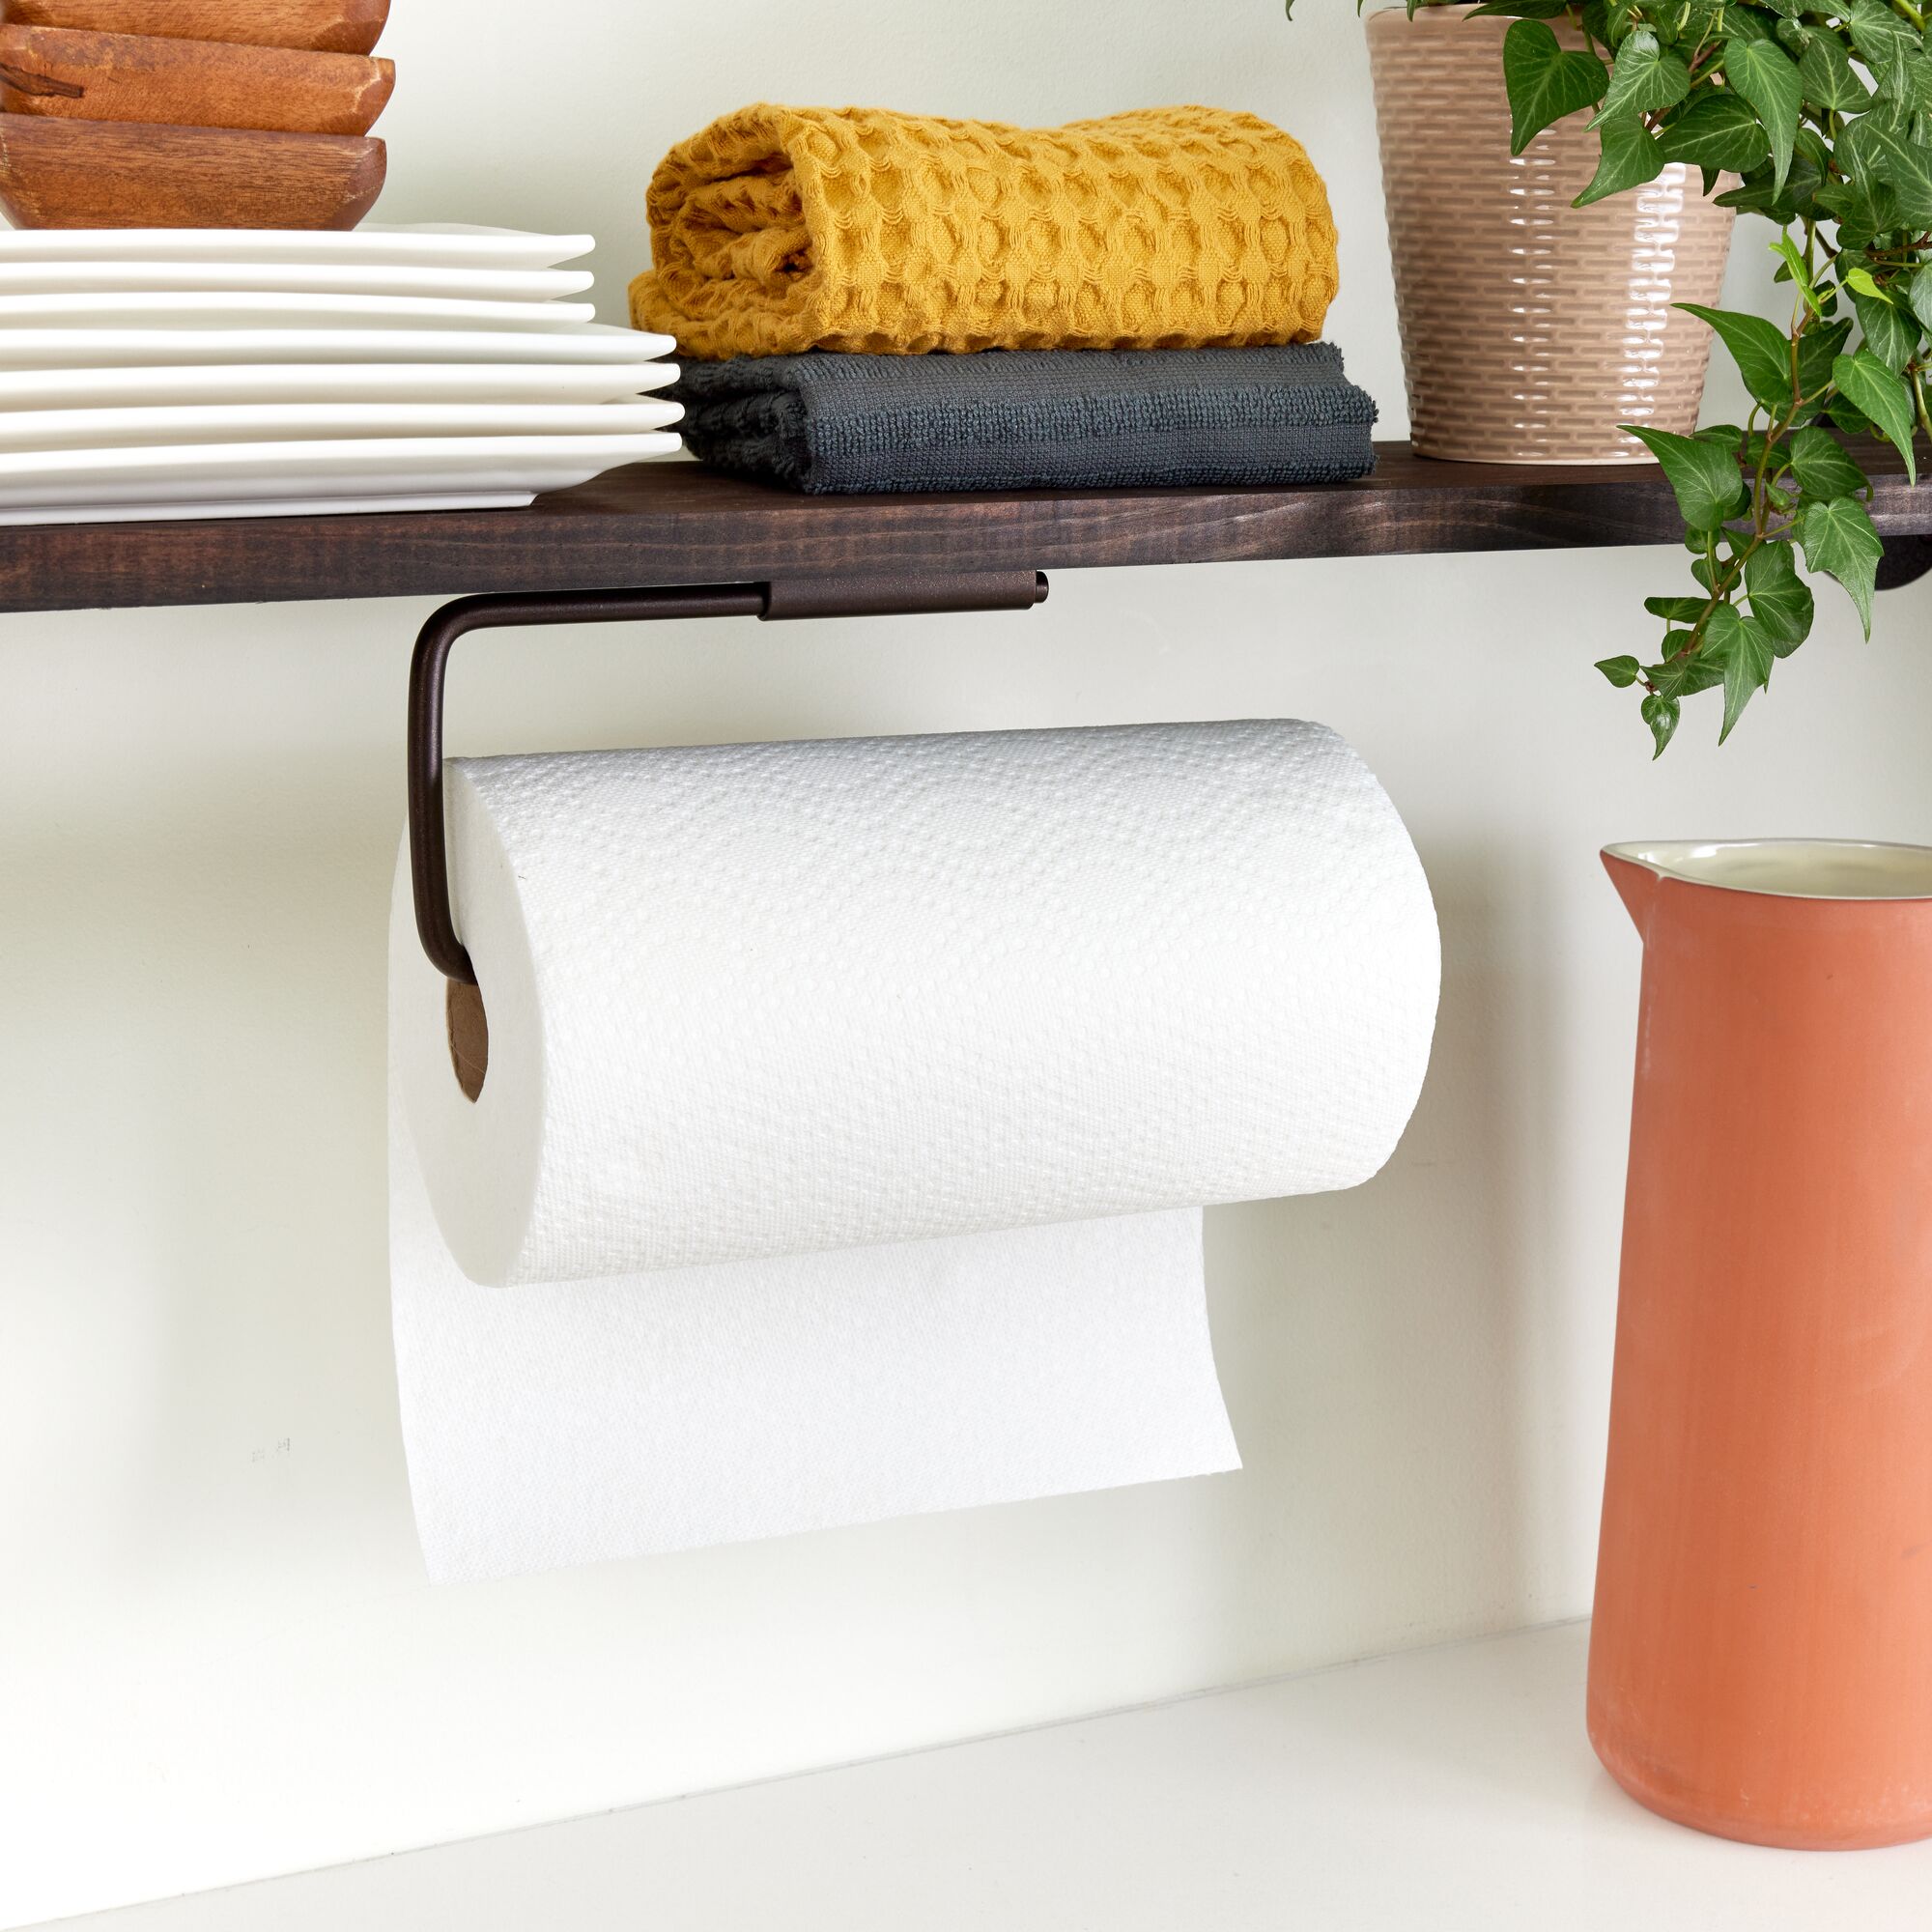 iDesign Swivel Paper Towel Holder for Kitchen, Wall Mount, Under Cabinet, Bronze - image 5 of 7